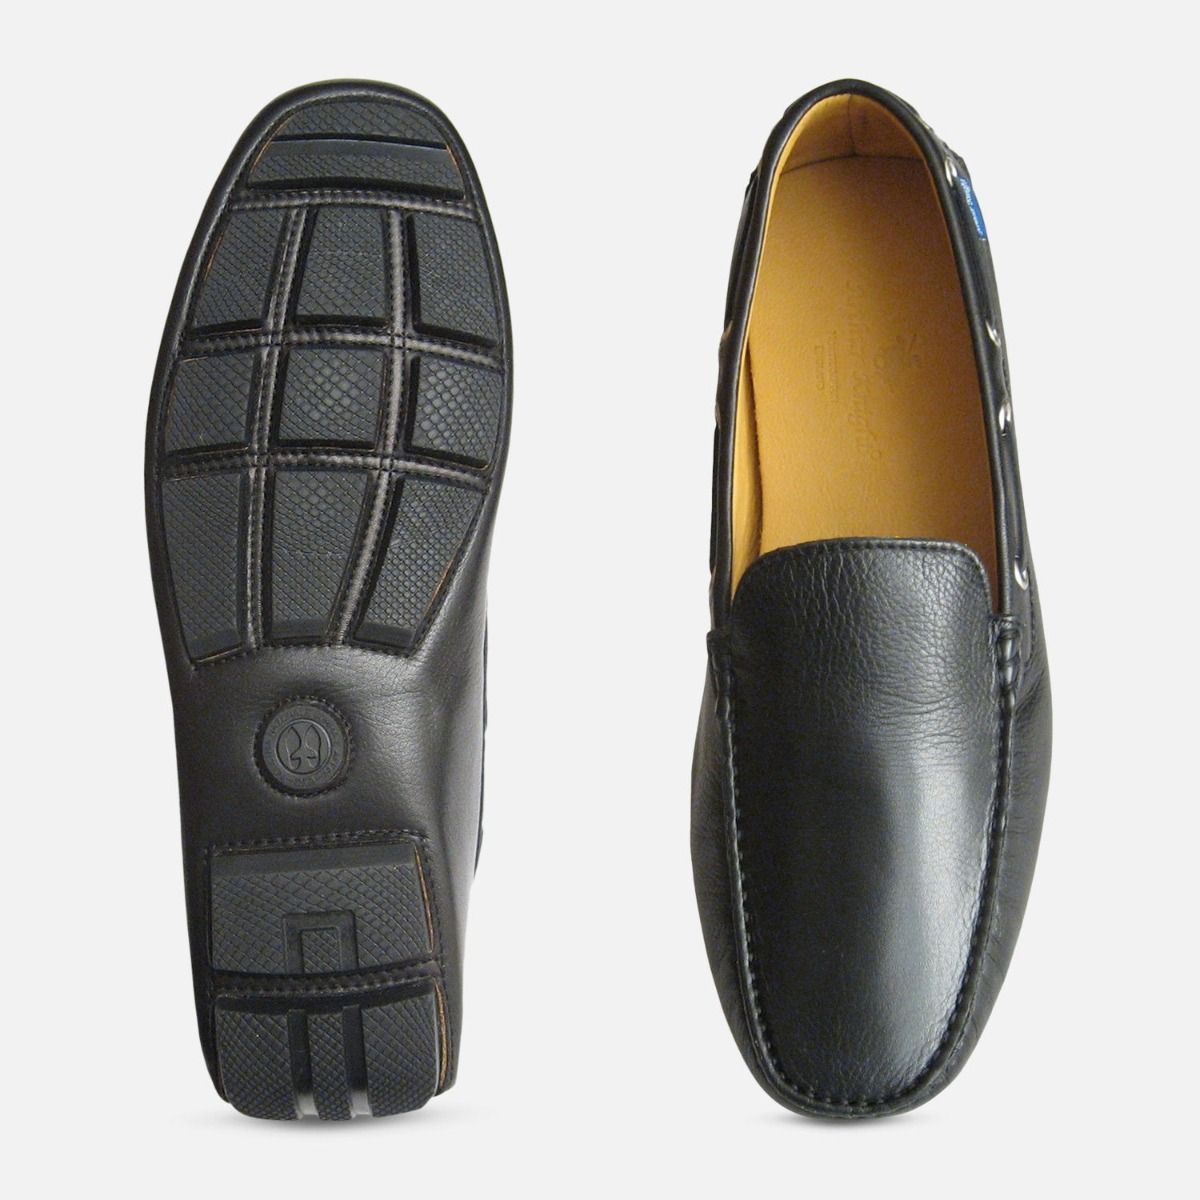 italian driving shoes mens